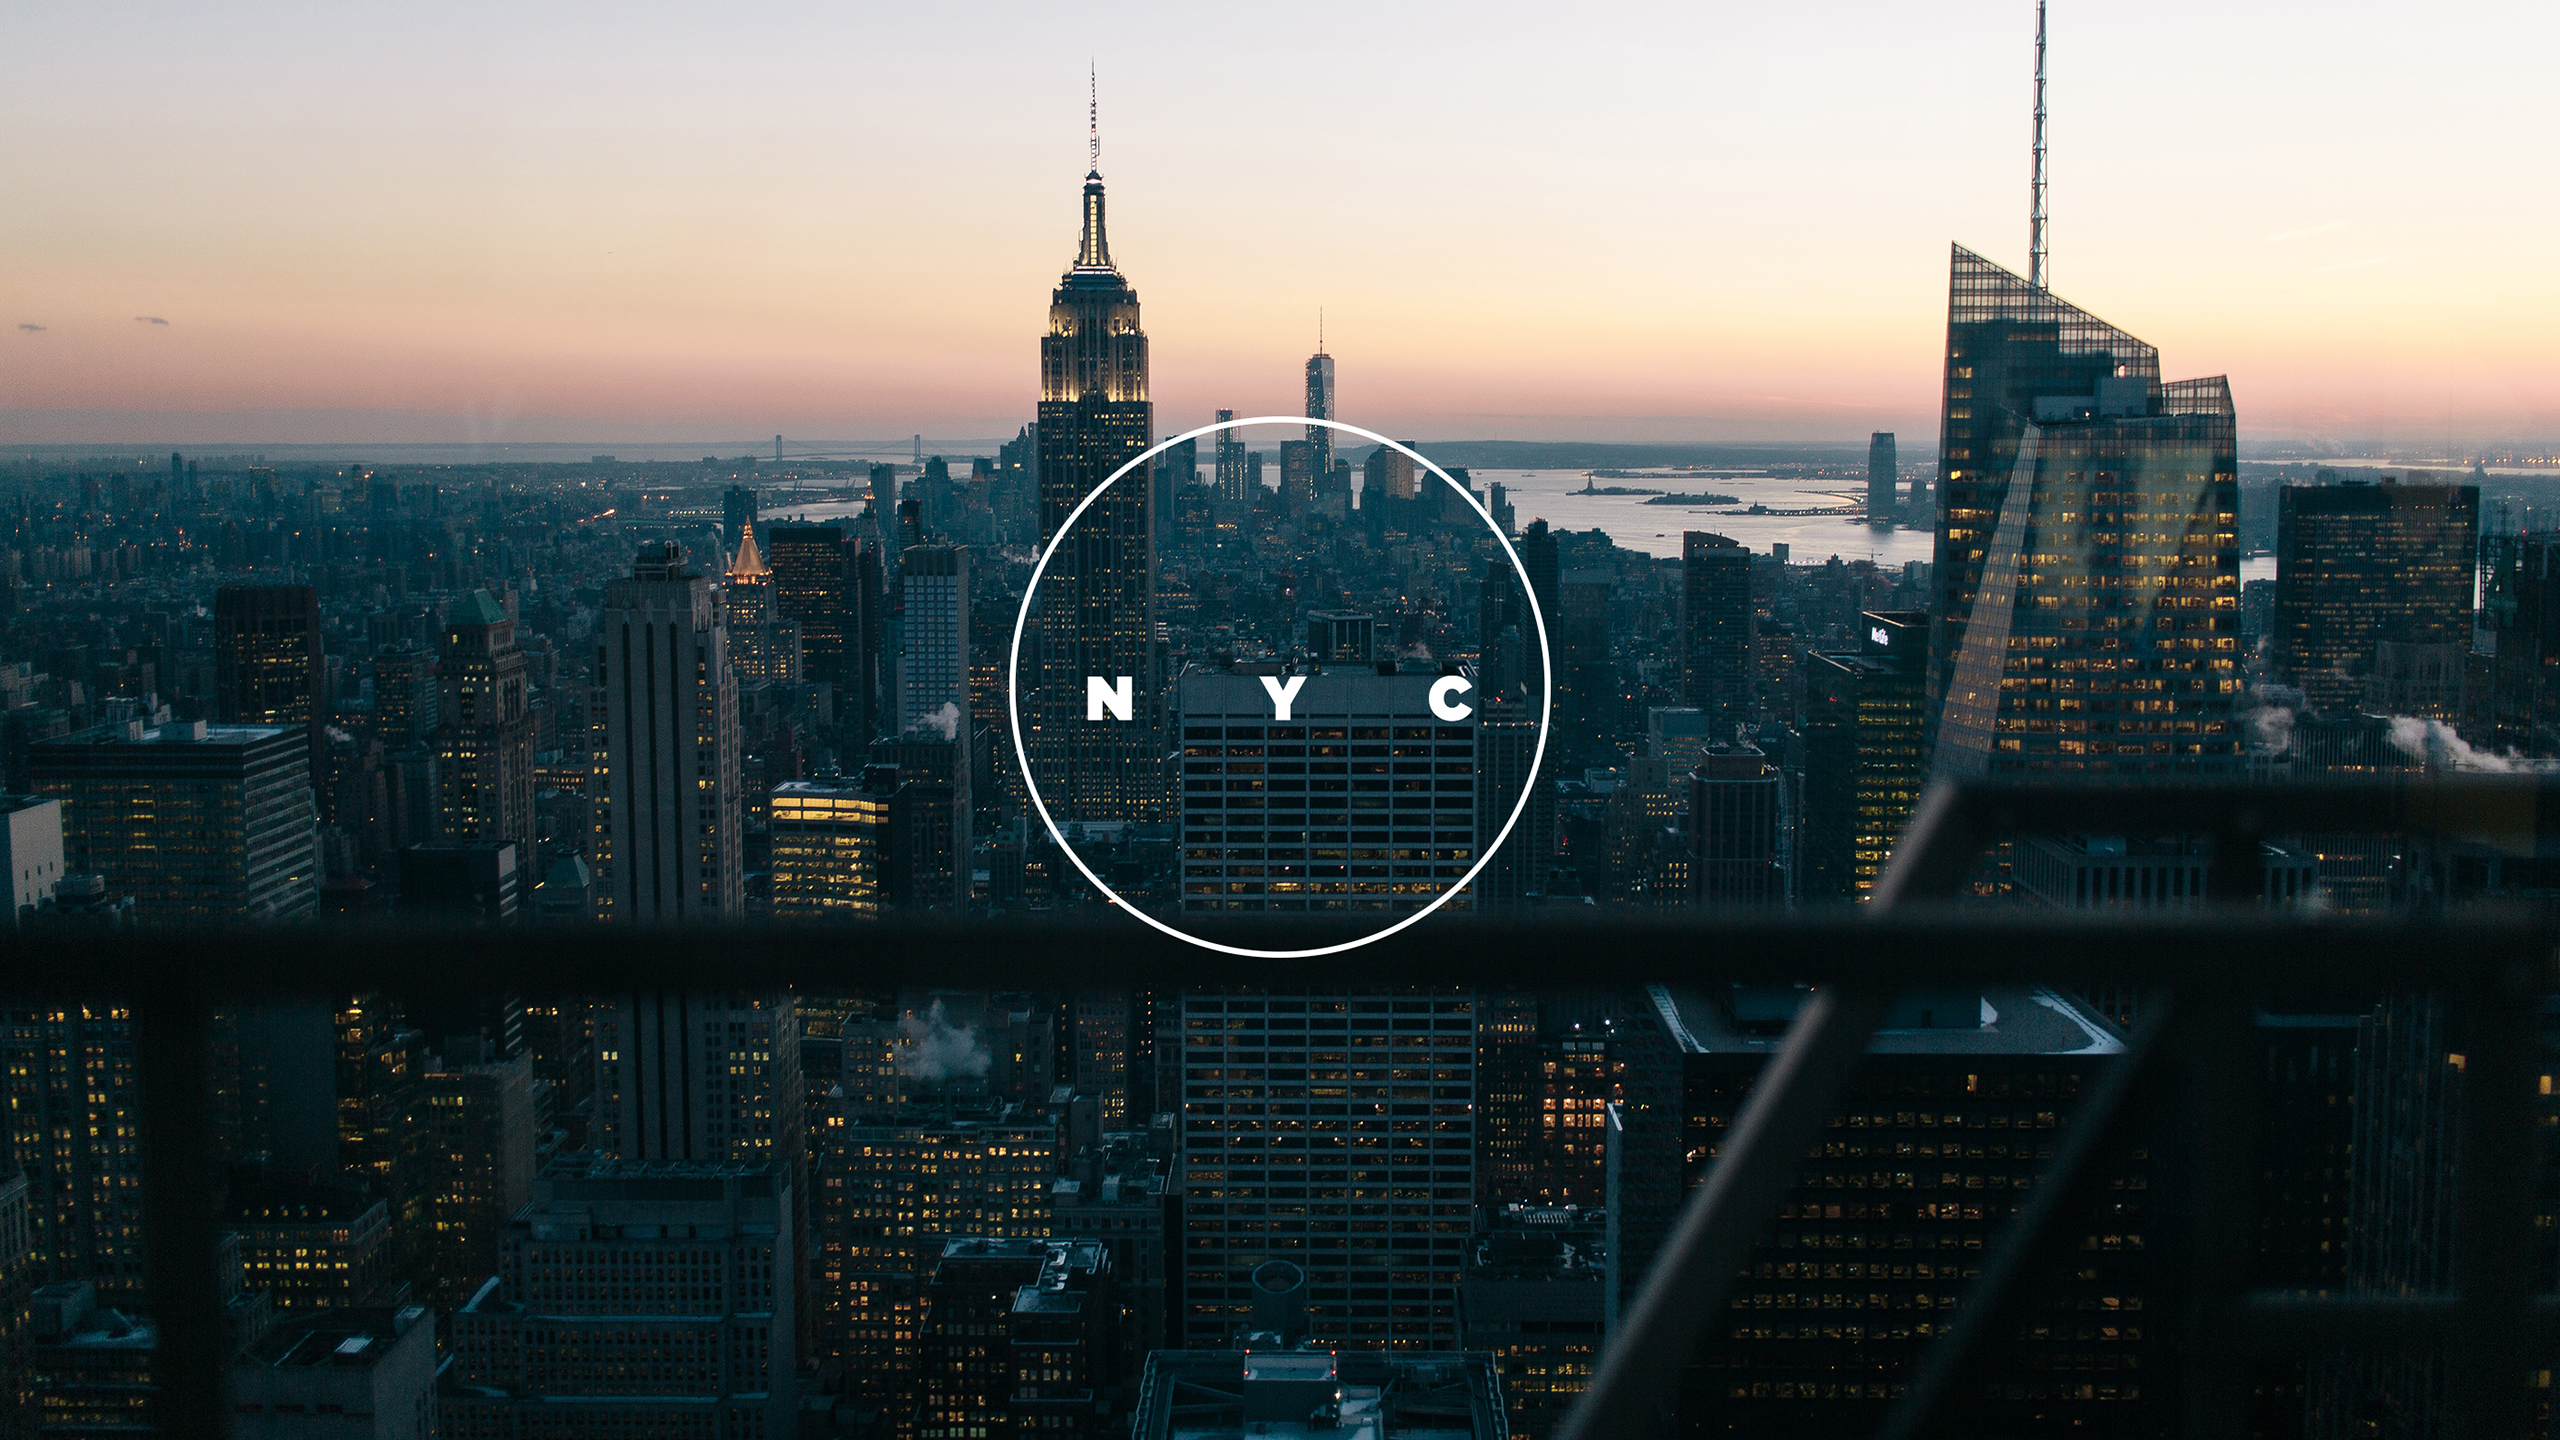 York Tumblr Backgrounds New City York Ecran City Fond New